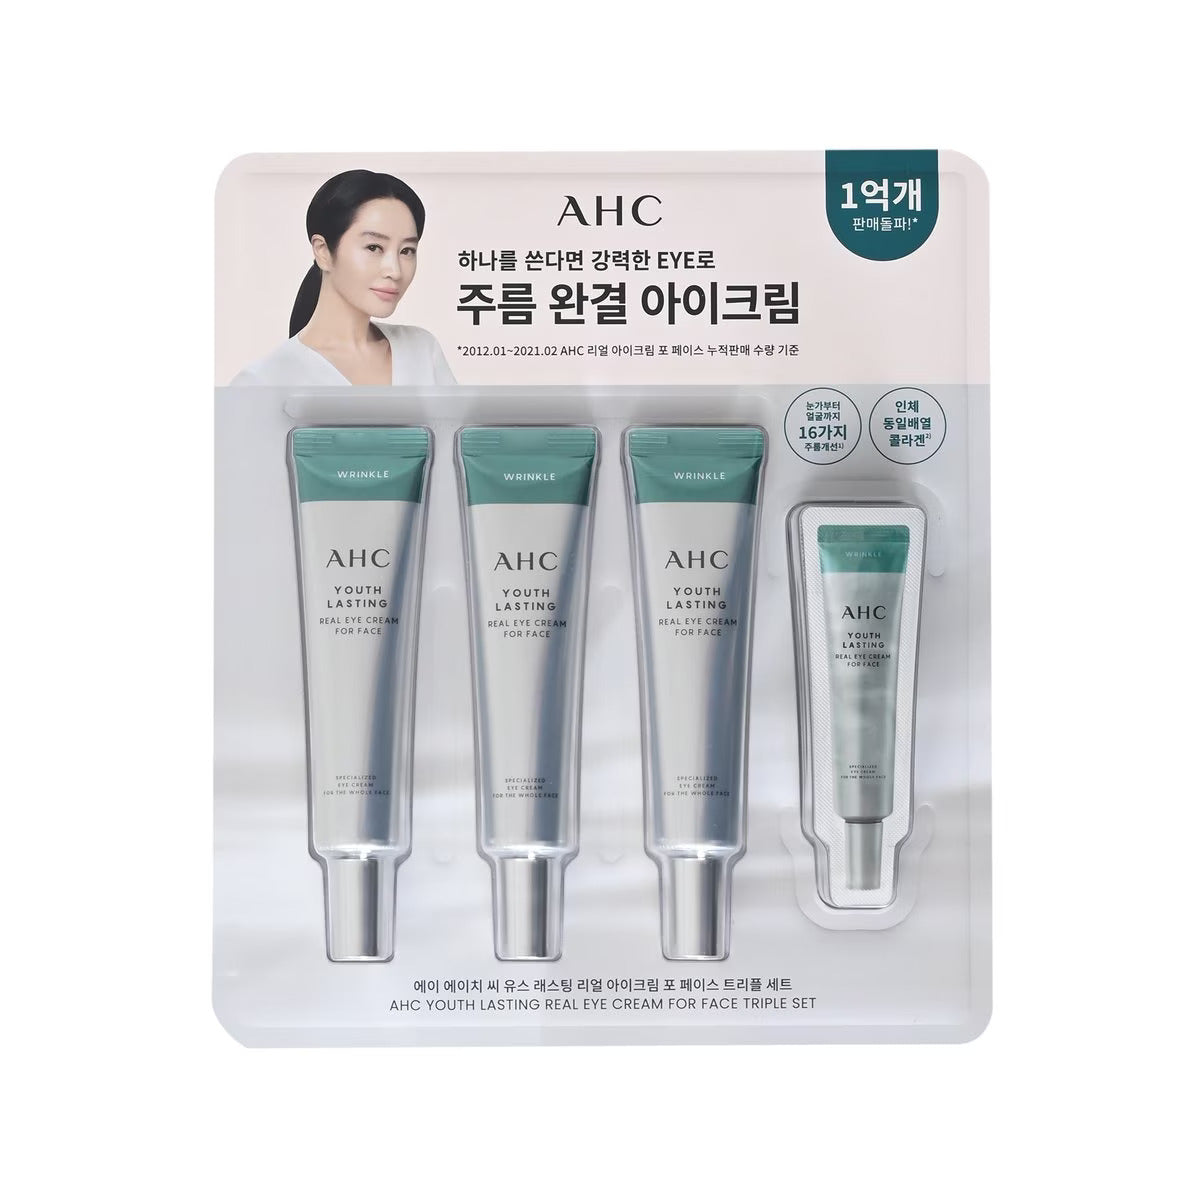 AHC Youth Lasting Eye Cream Set | Wrinkle & Skin Hydration